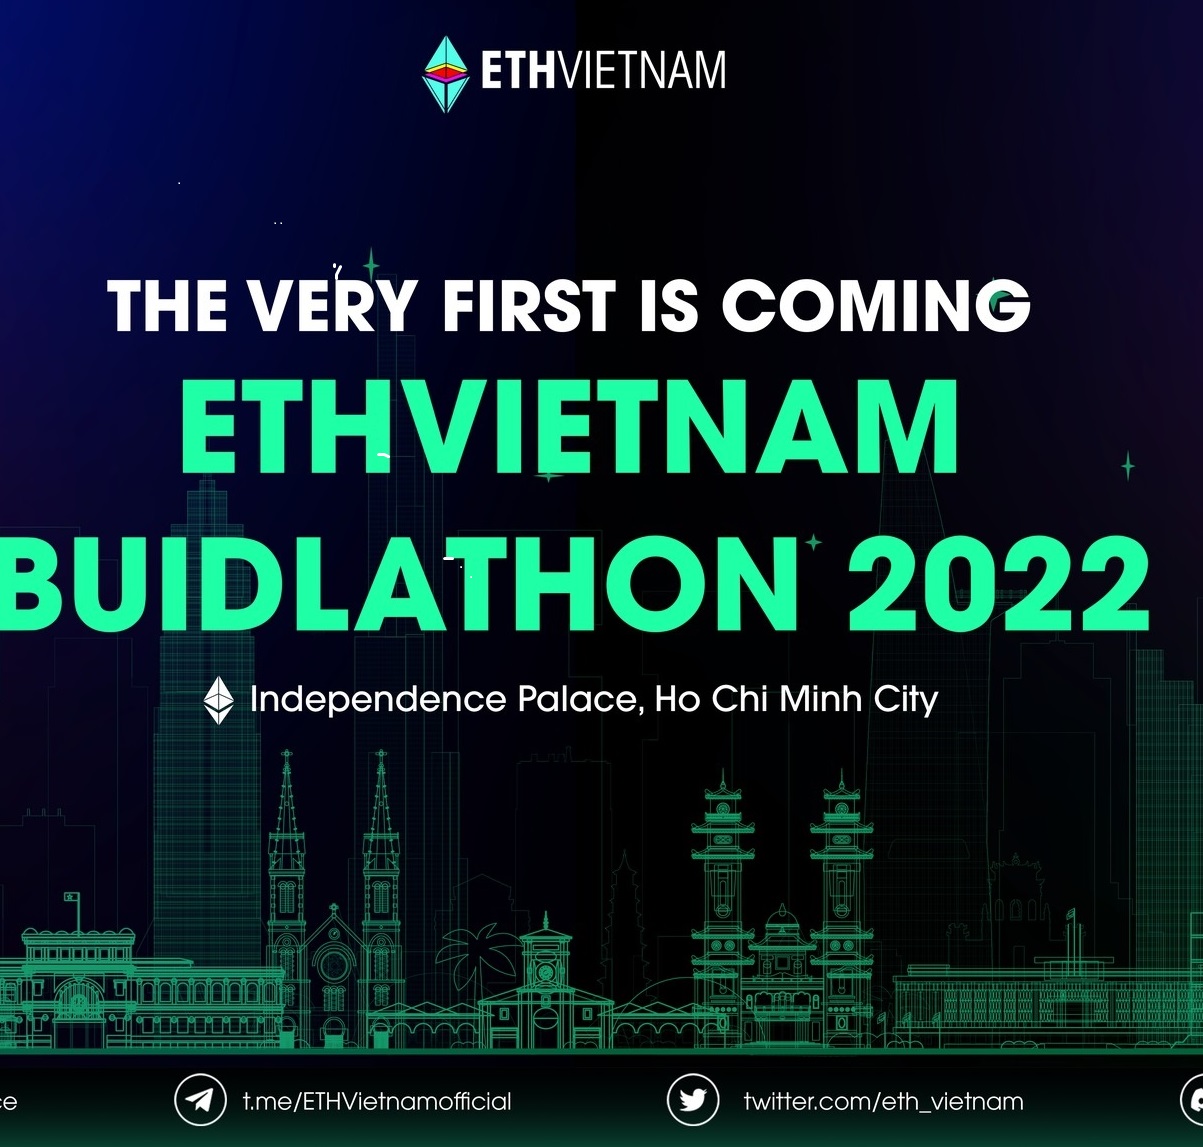 ETHVIETNAM BUIDLATHON 2022